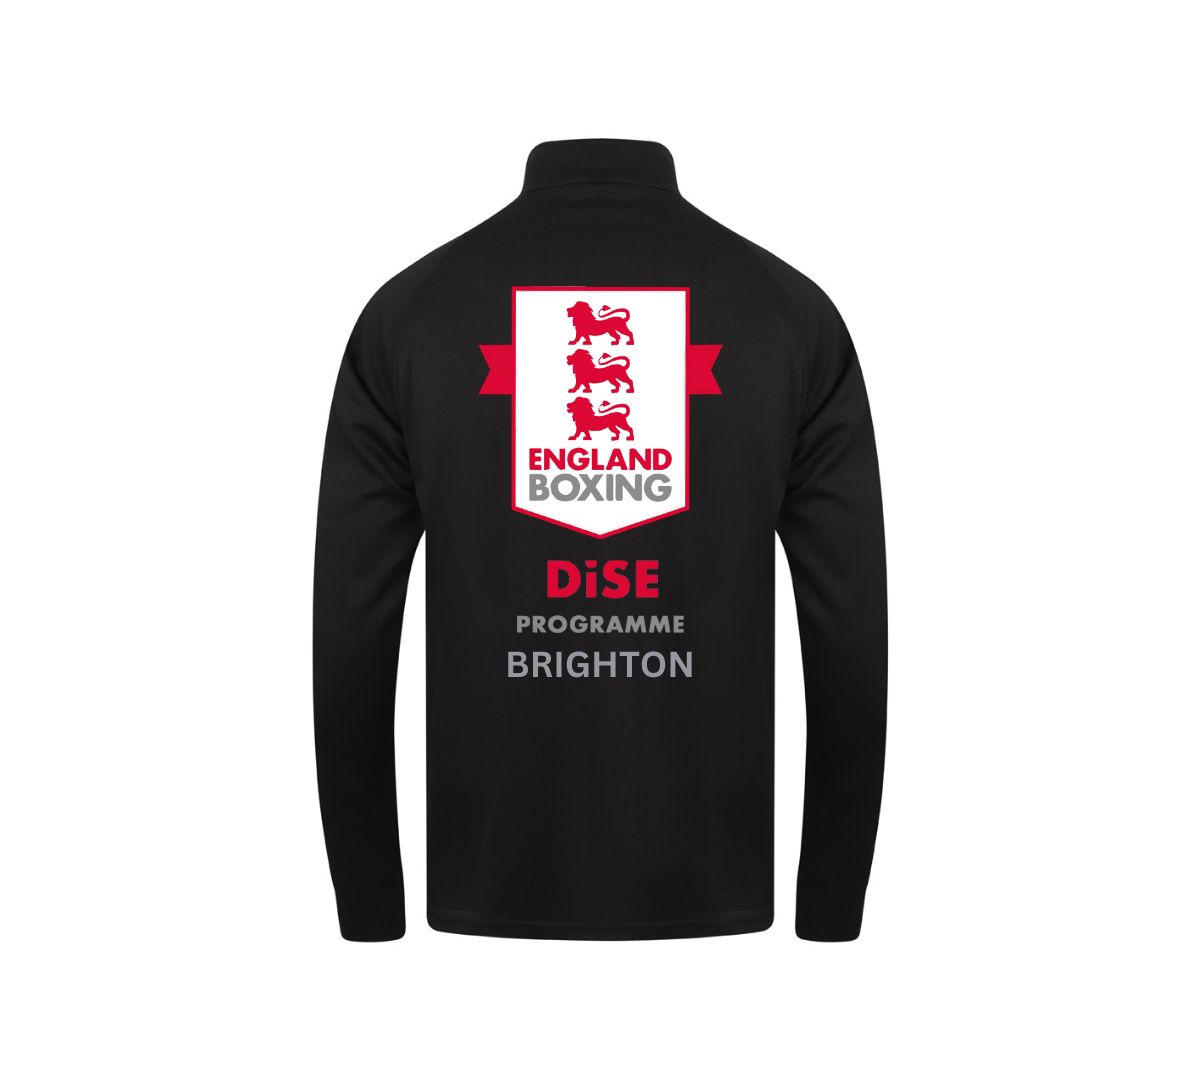 DiSE Programme (Brighton) Tracksuit Top